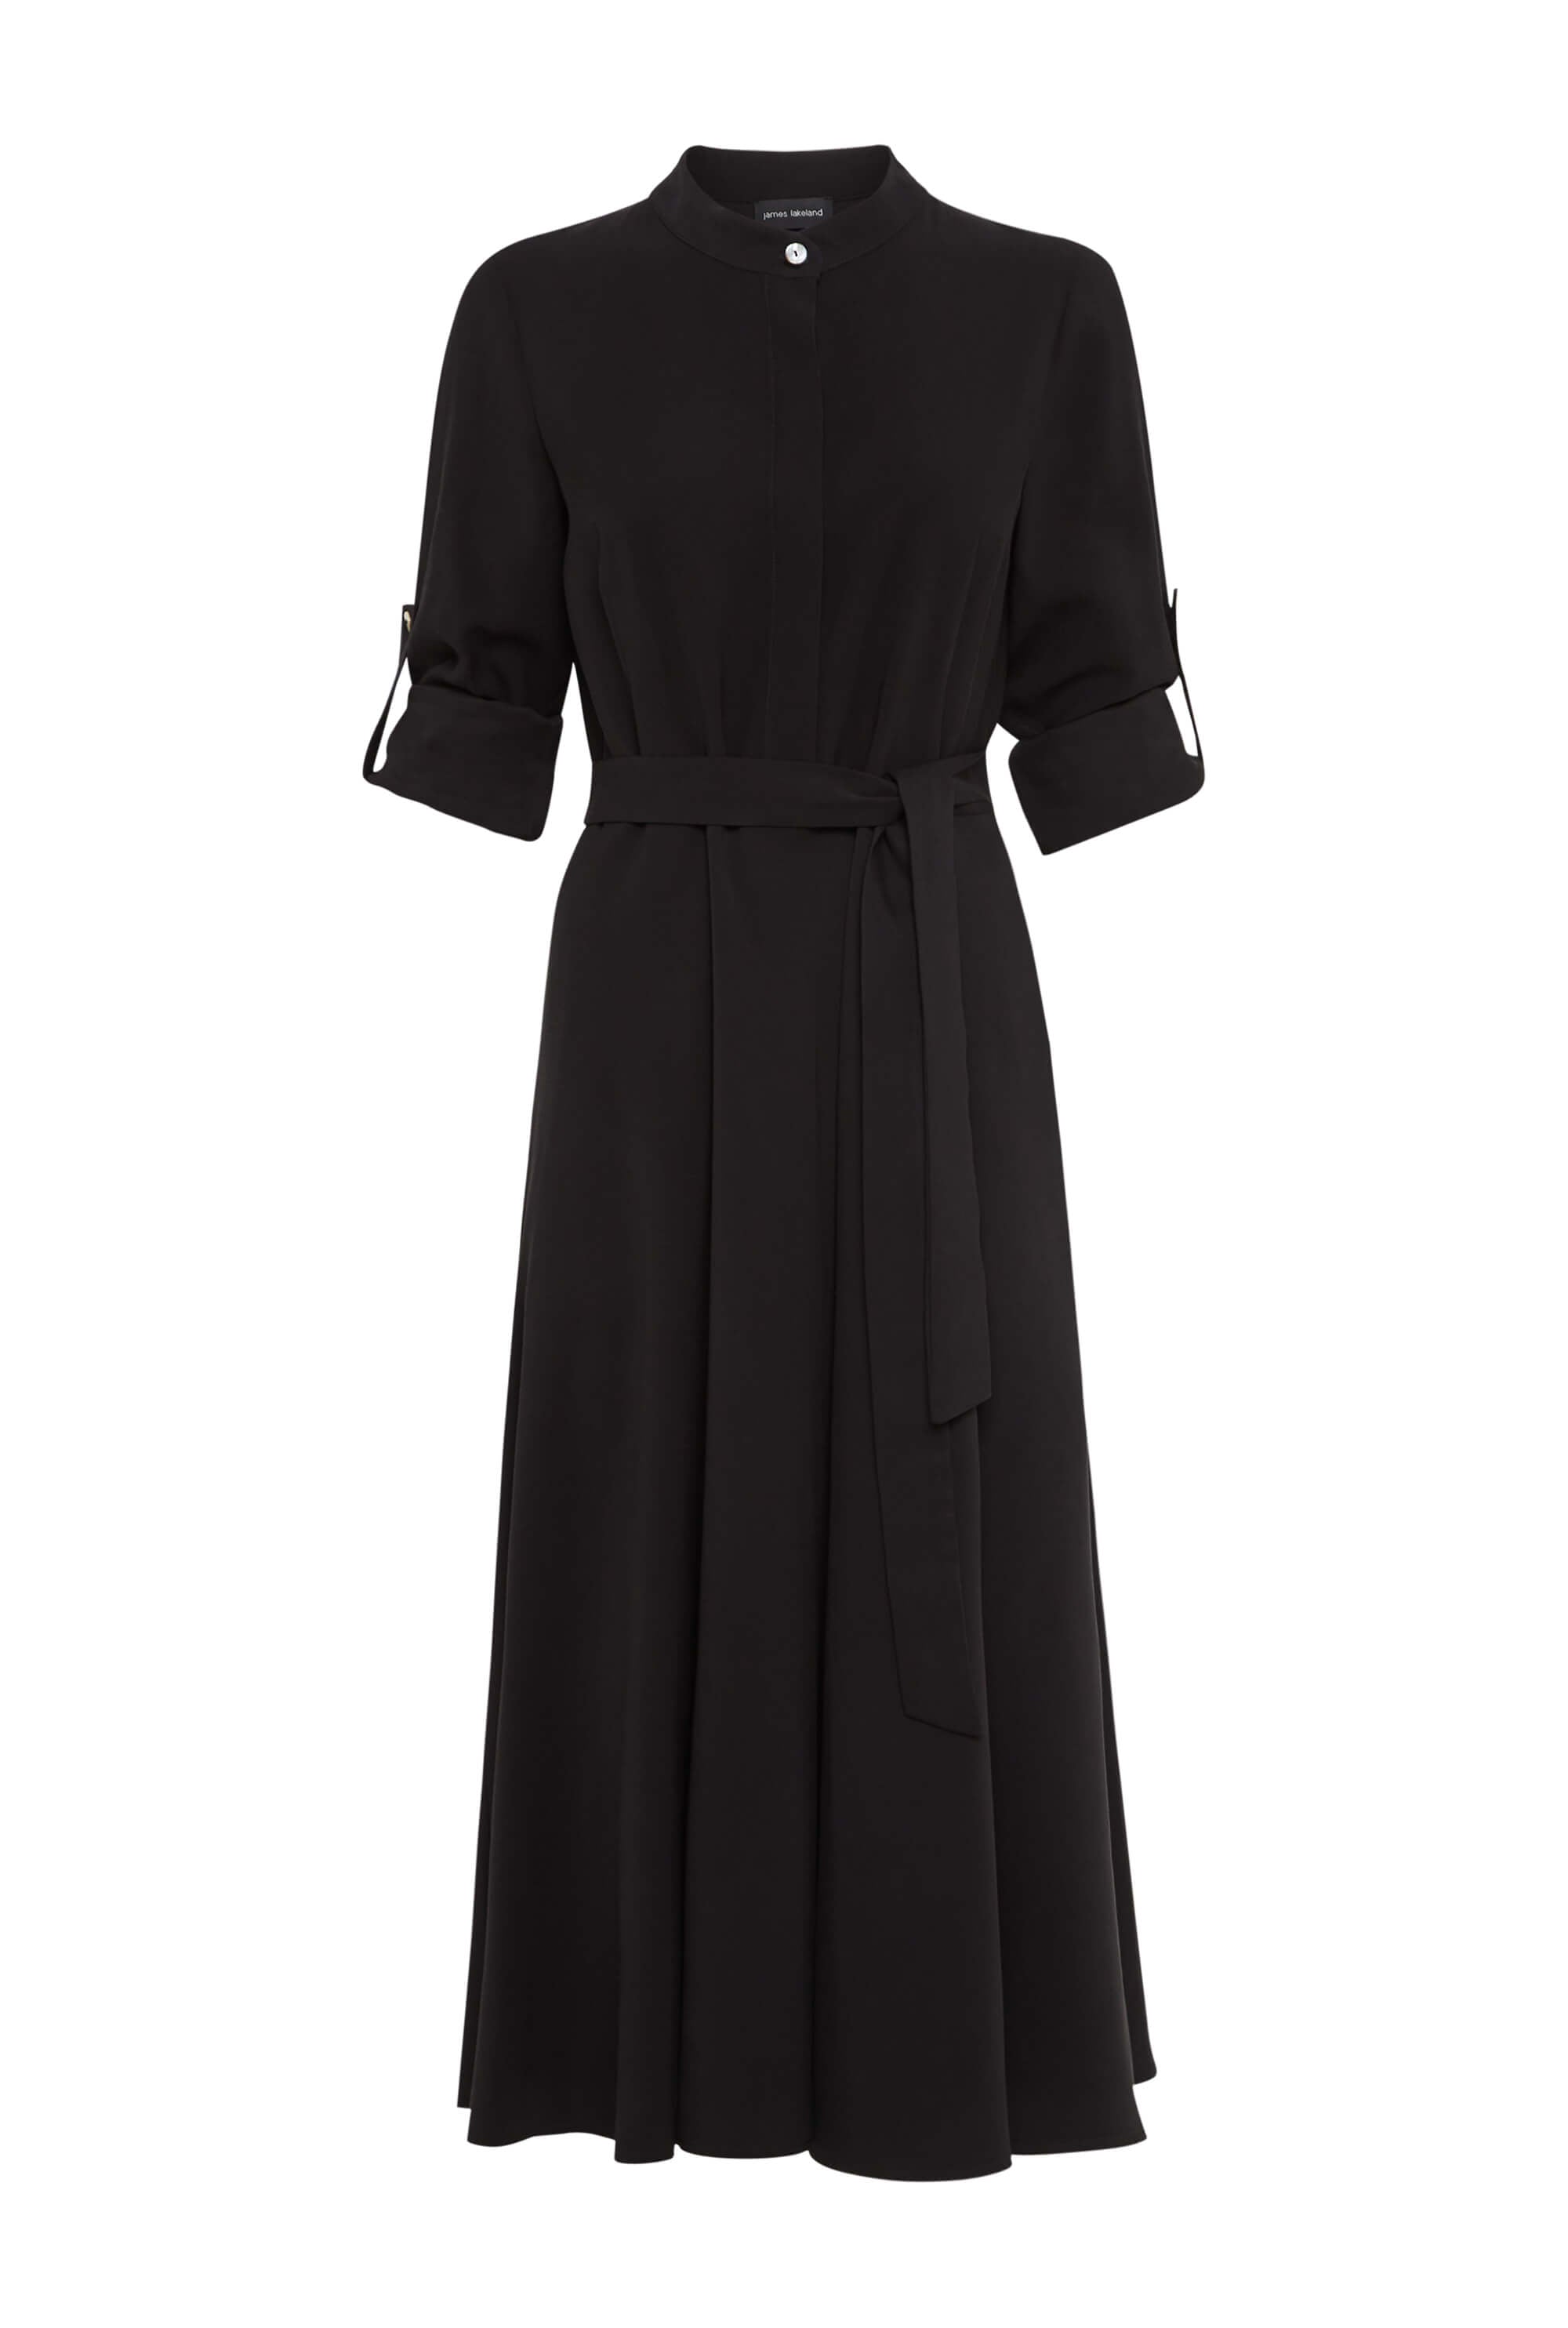 James Lakeland Women's Black Roll Sleeve Midi Dress